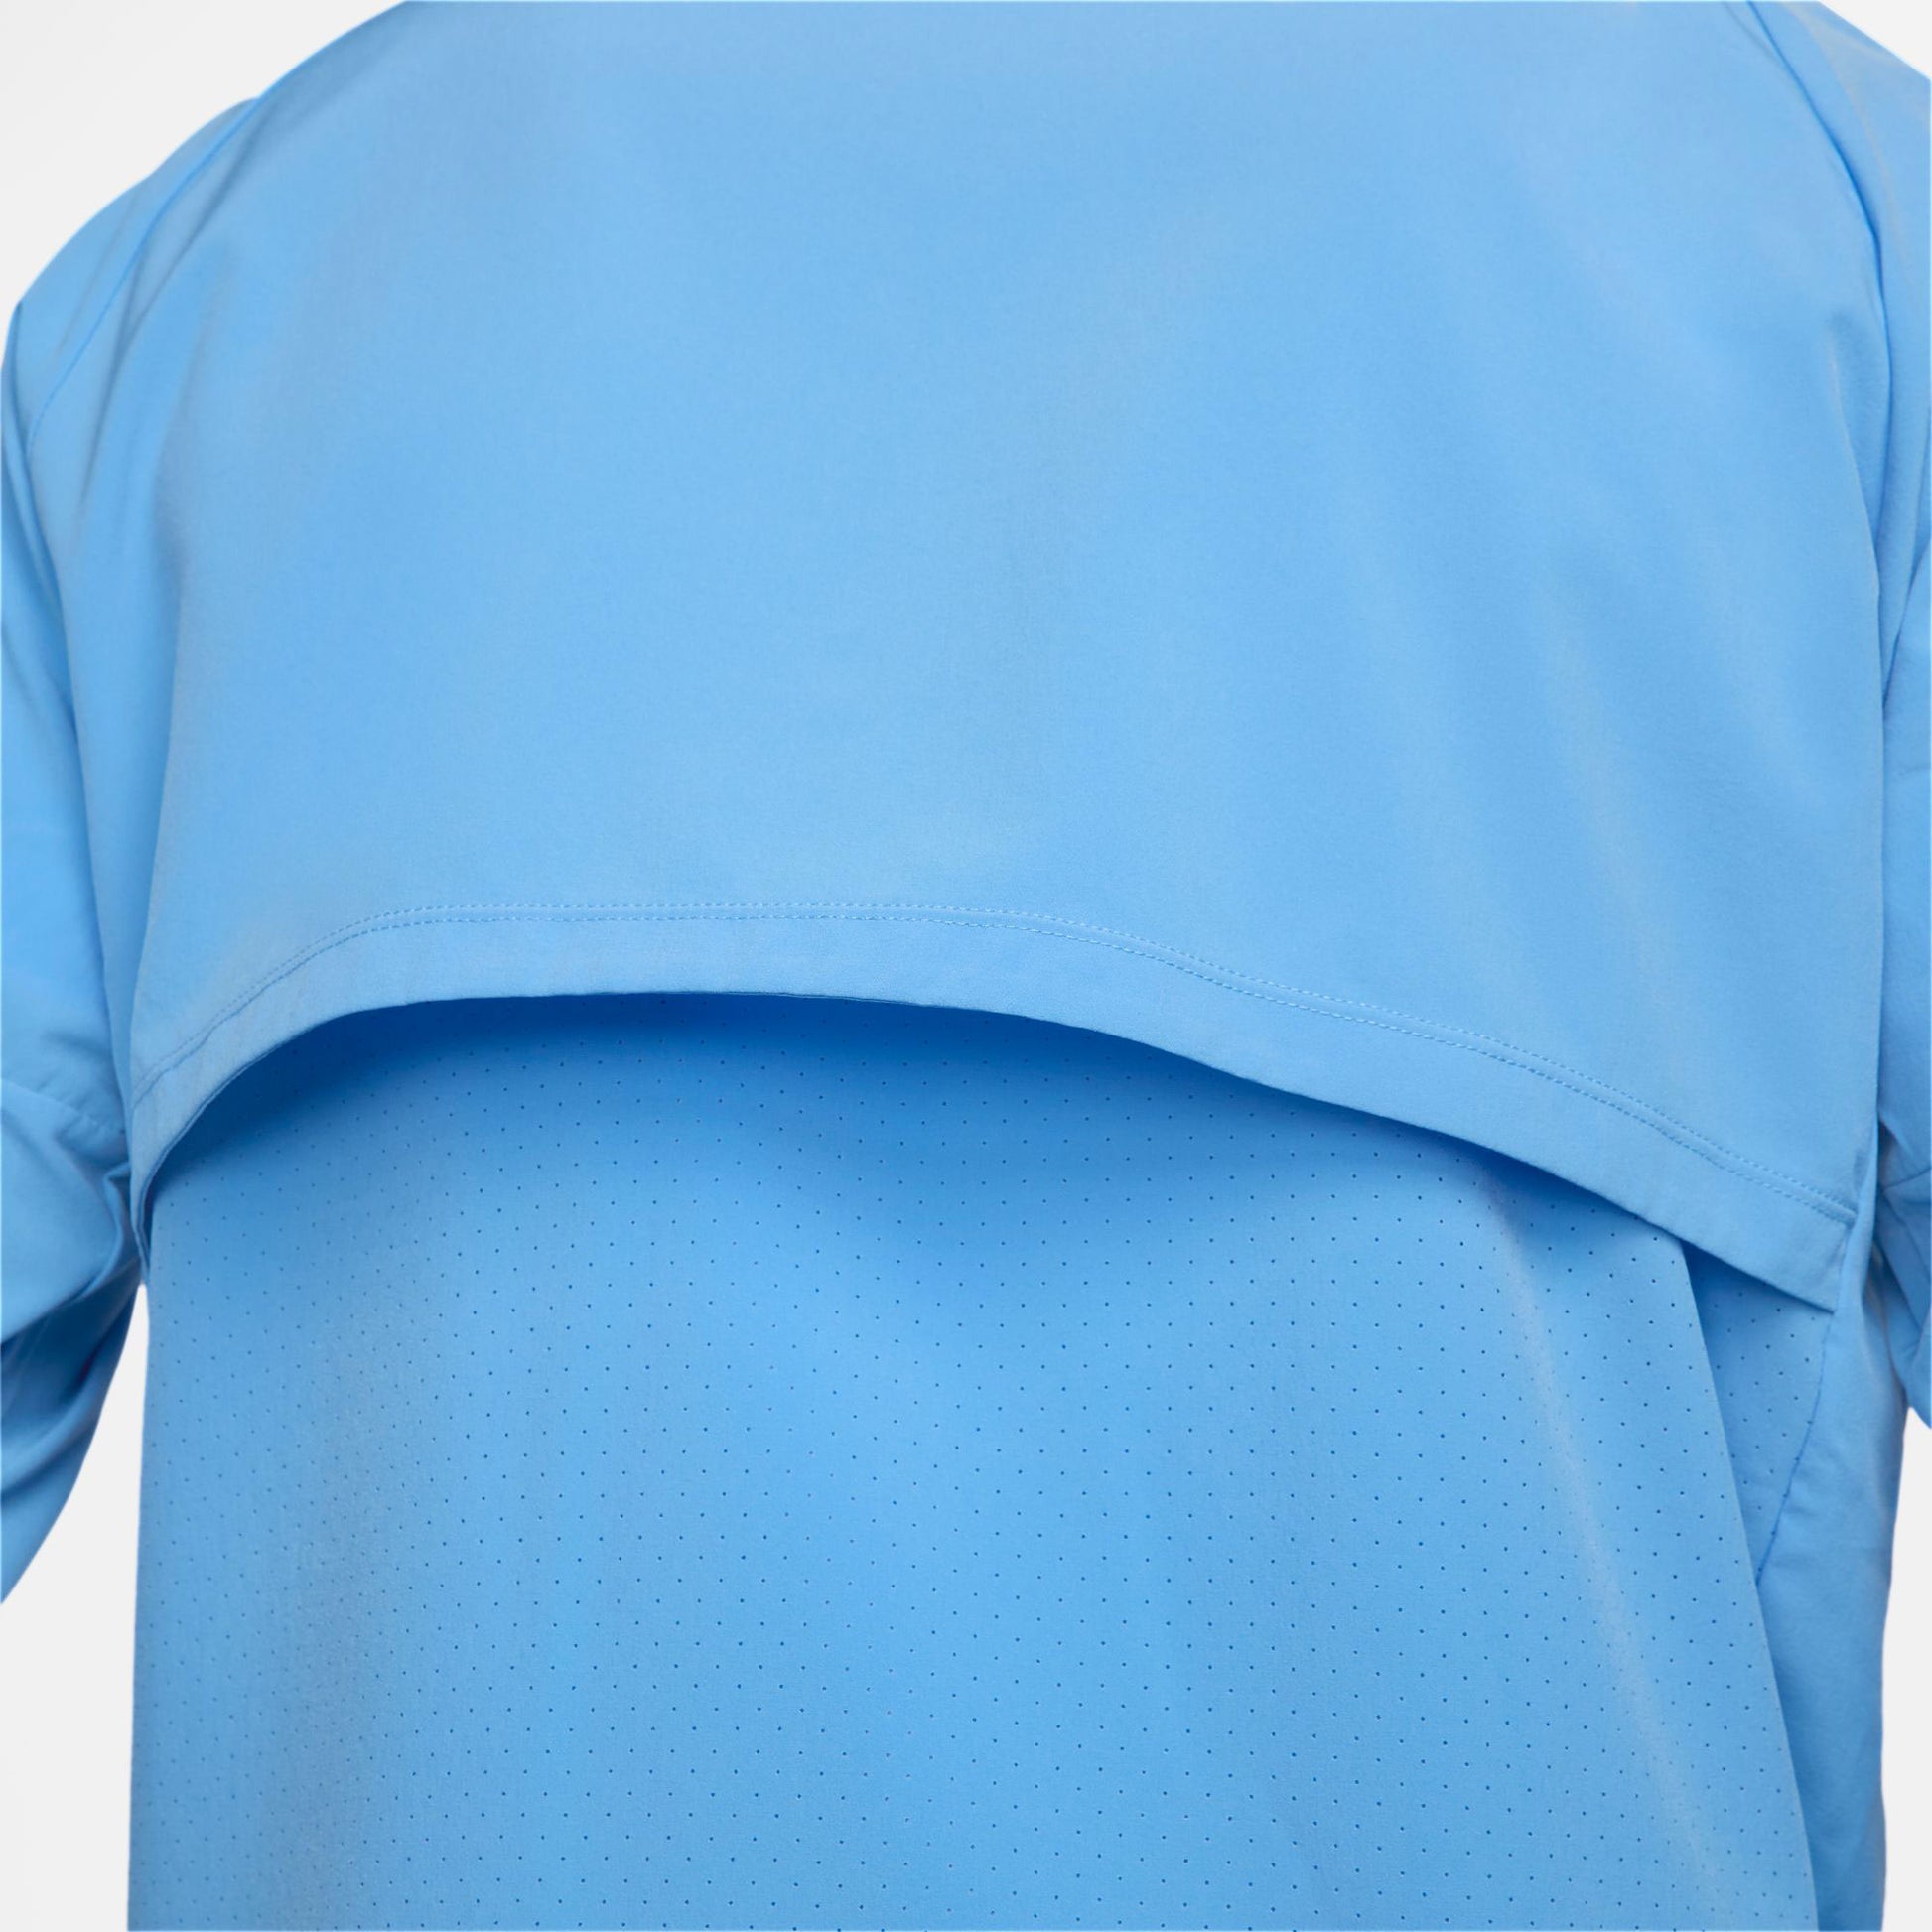 NikeCourt Rafa Dri-FIT Men's Tennis Jacket Blue (4)